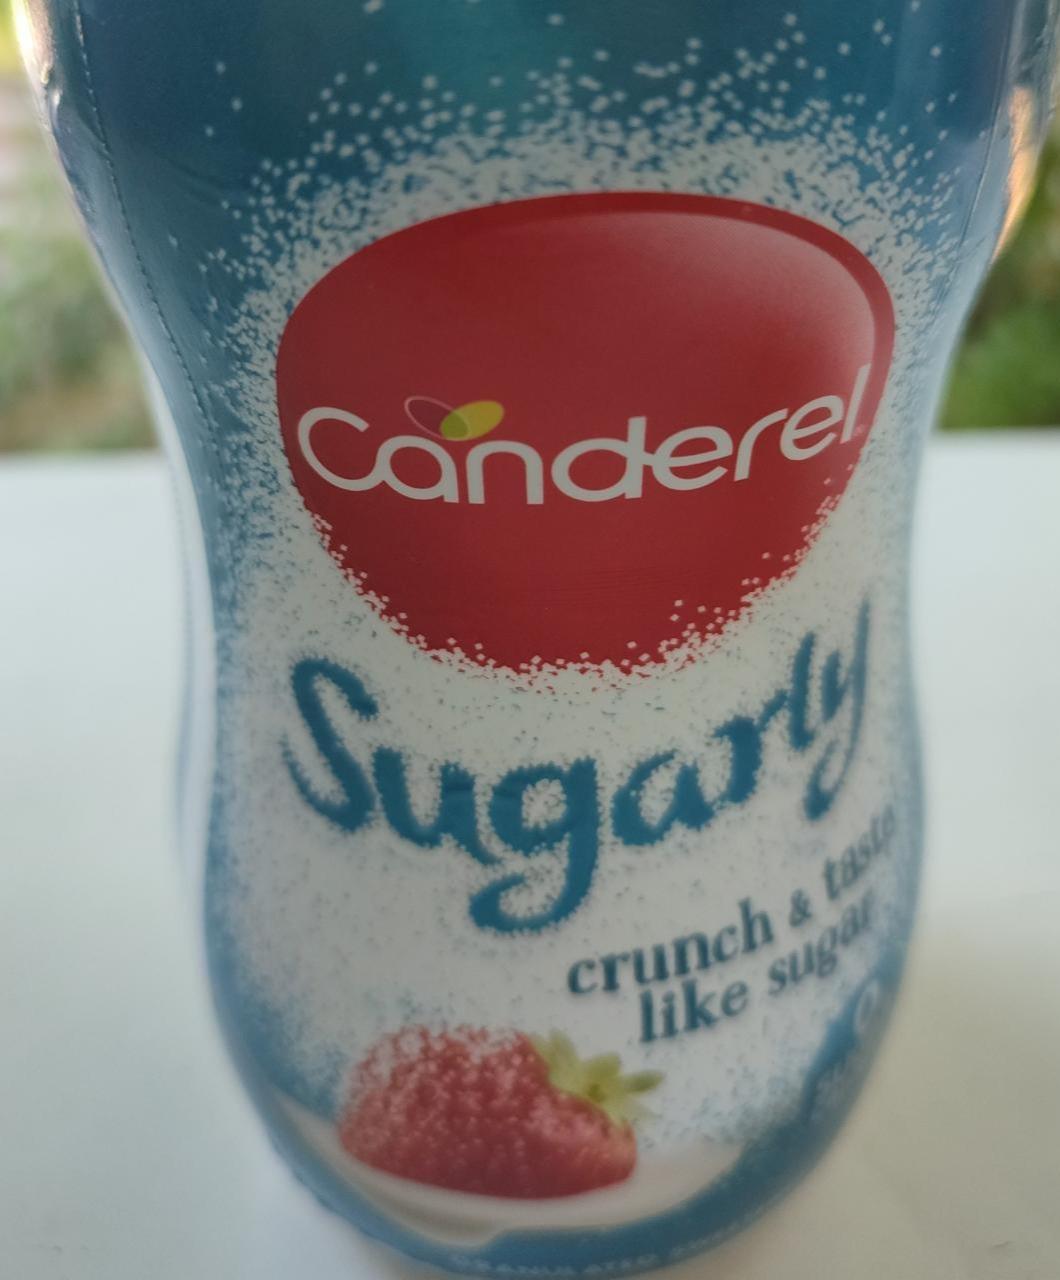 Fotografie - Sugarly crunch & taste like sugar Canderel